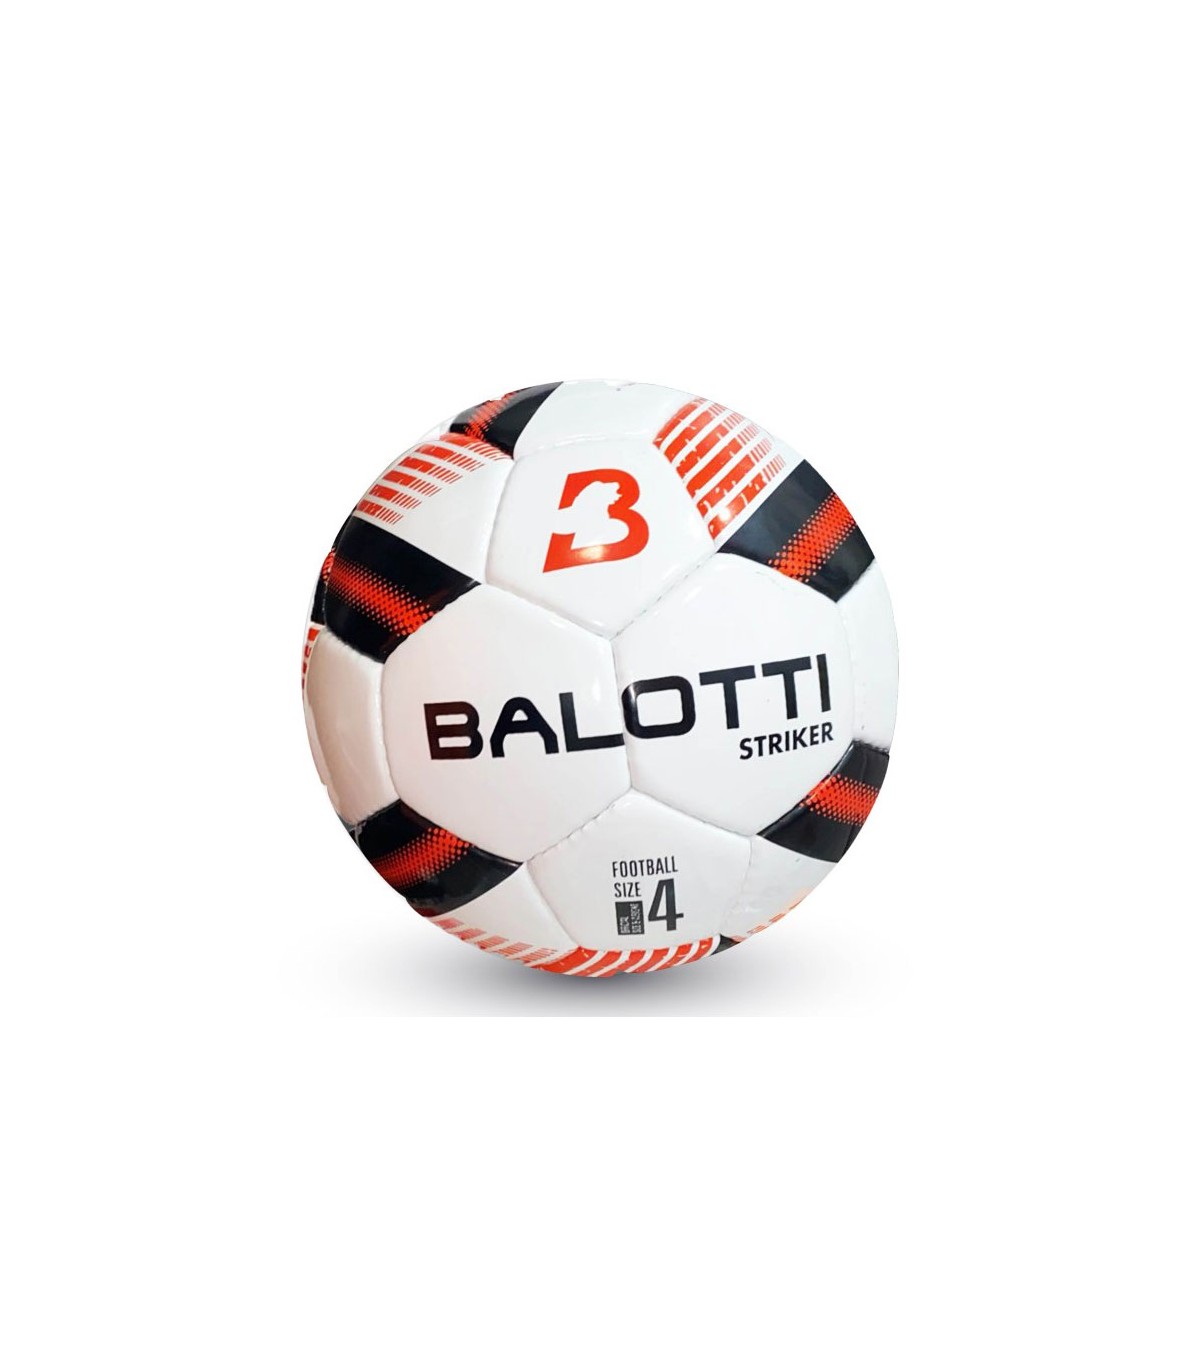 Bot IJver Vreemdeling Voetbal Balotti Striker maat 4